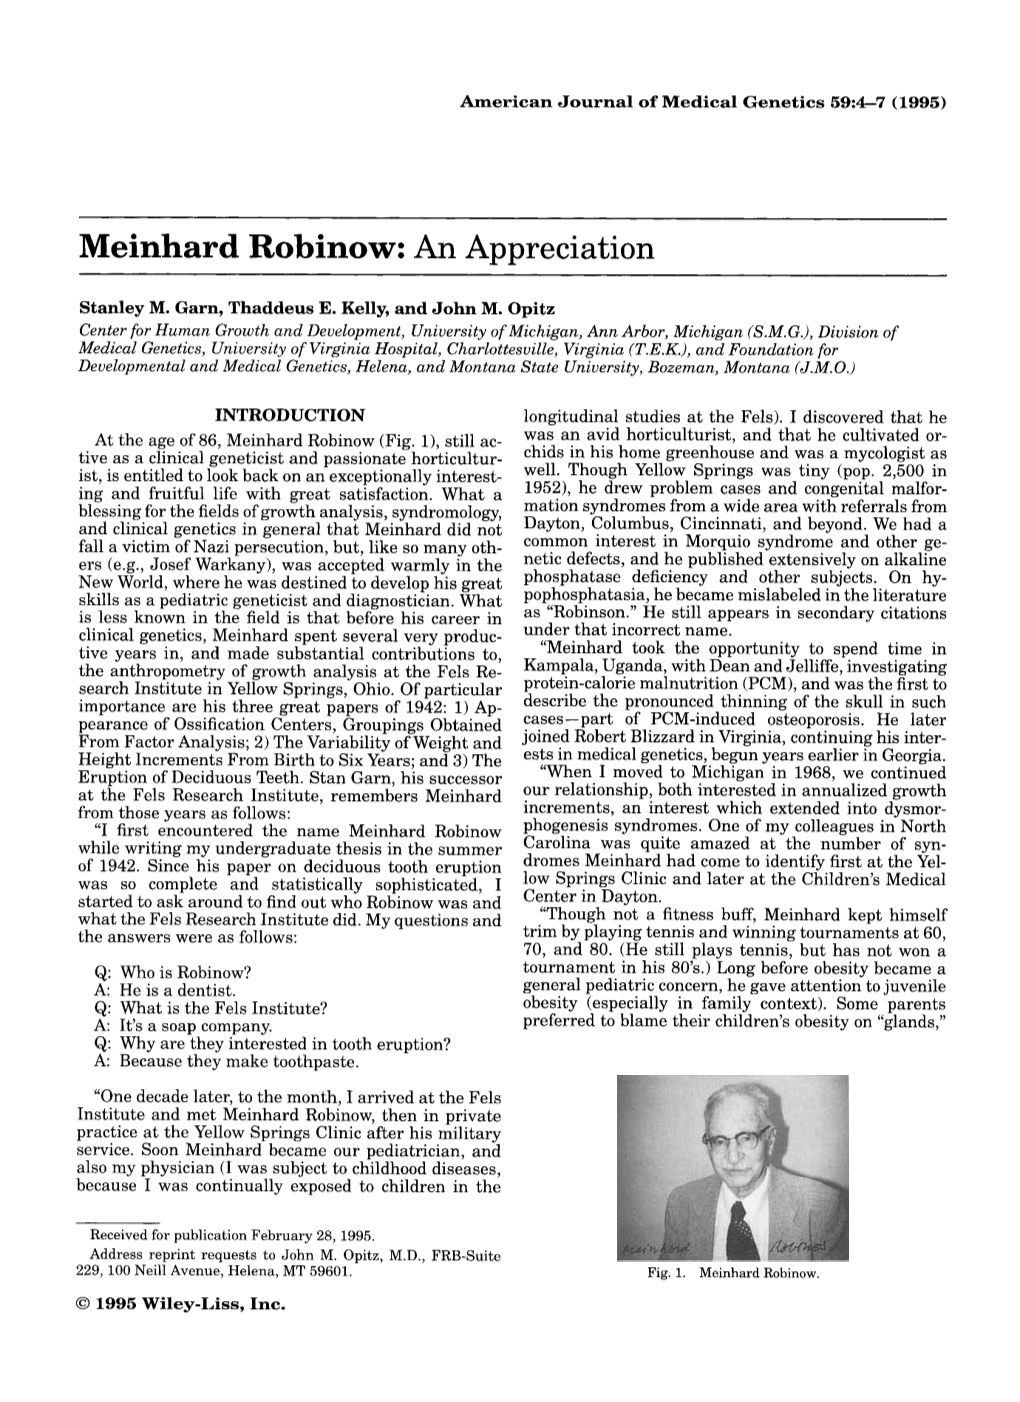 Meinhard Robinow: an Appreciation